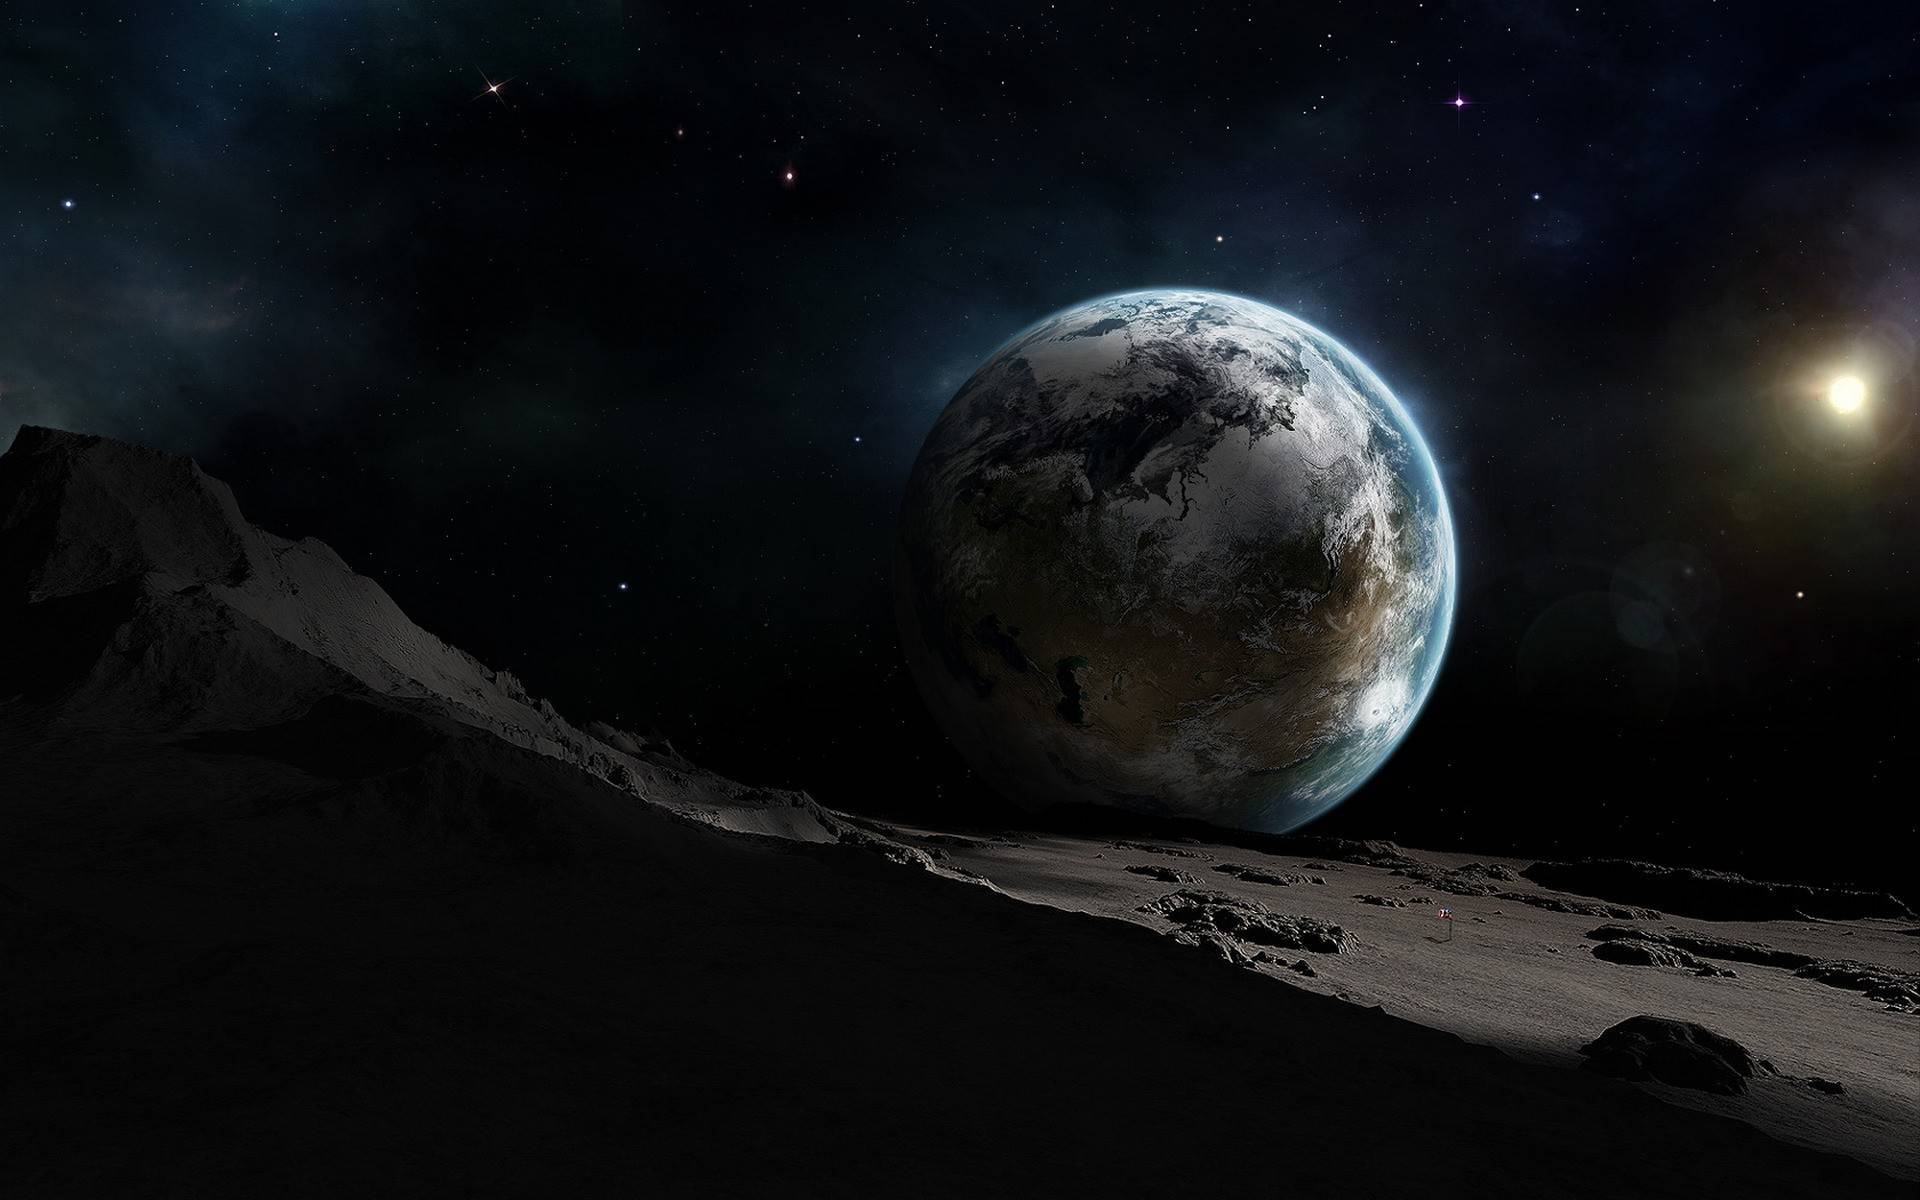 espacio fondo de pantalla hd,espacio exterior,luna,planeta,objeto astronómico,atmósfera